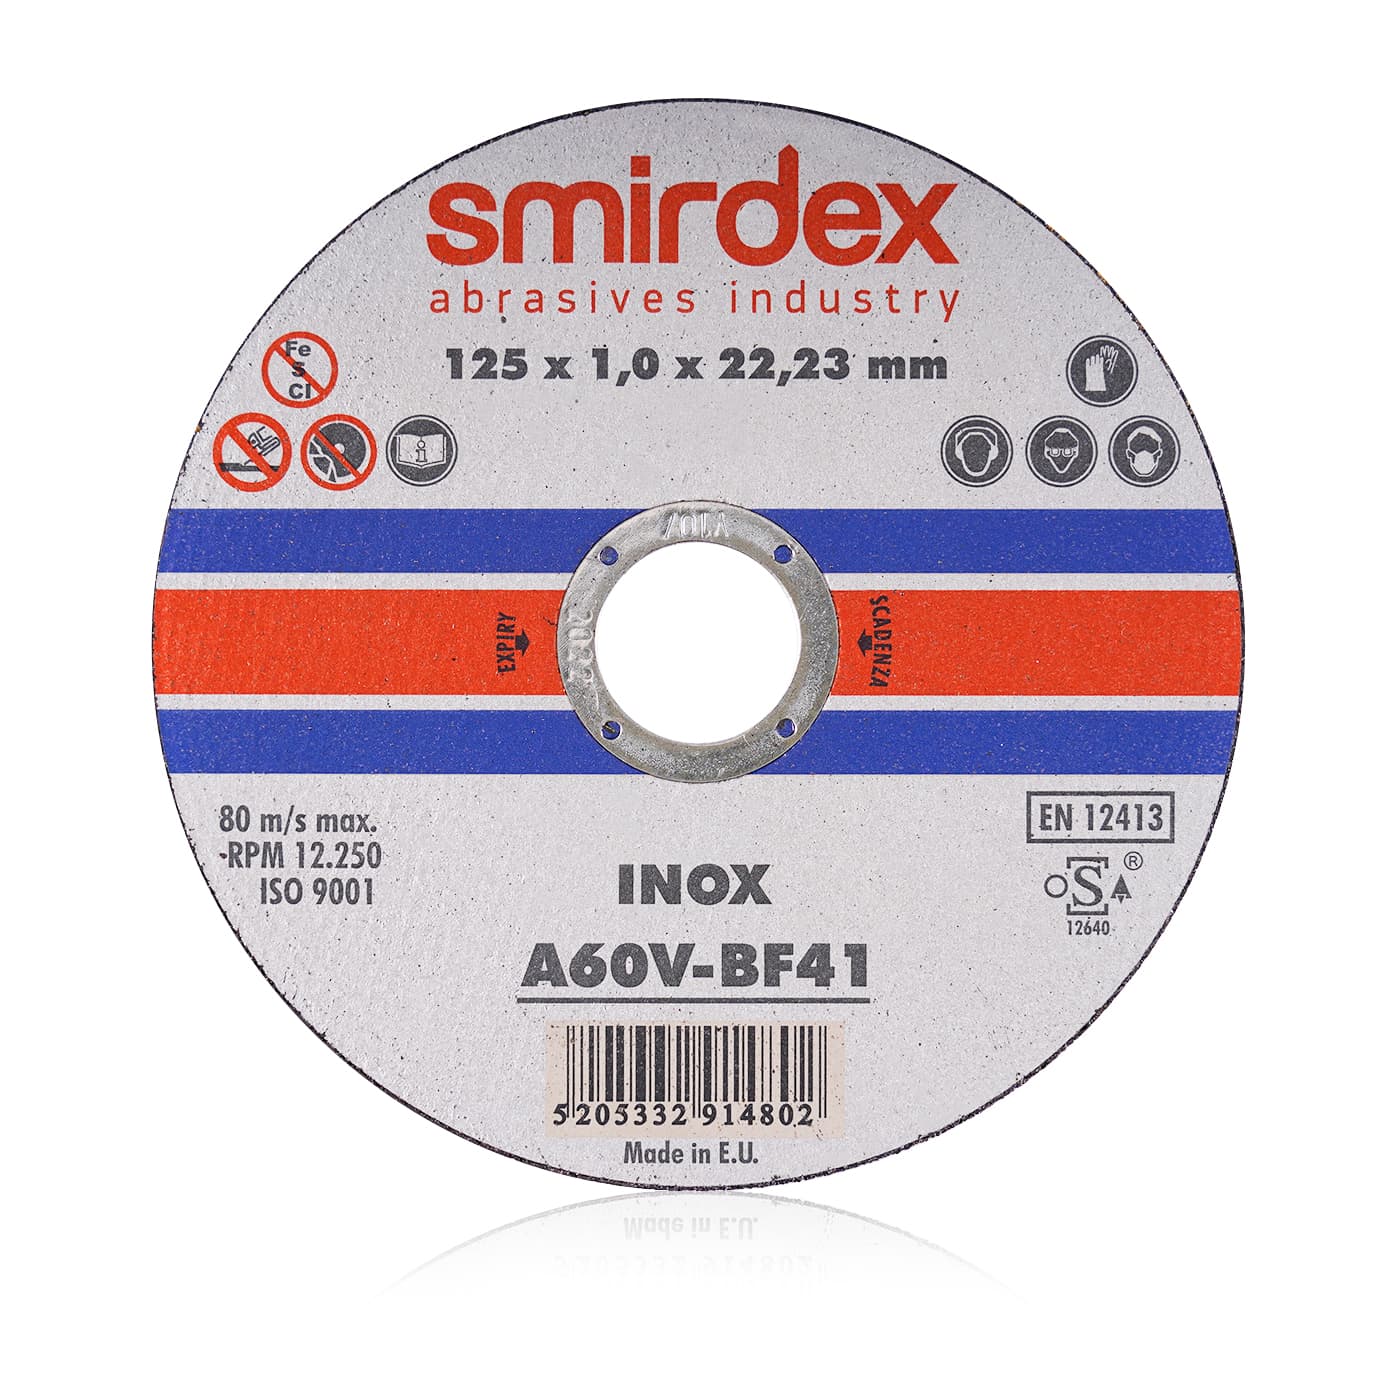 smirdex-911-cutting-wheels,fast,clean,accurate cut